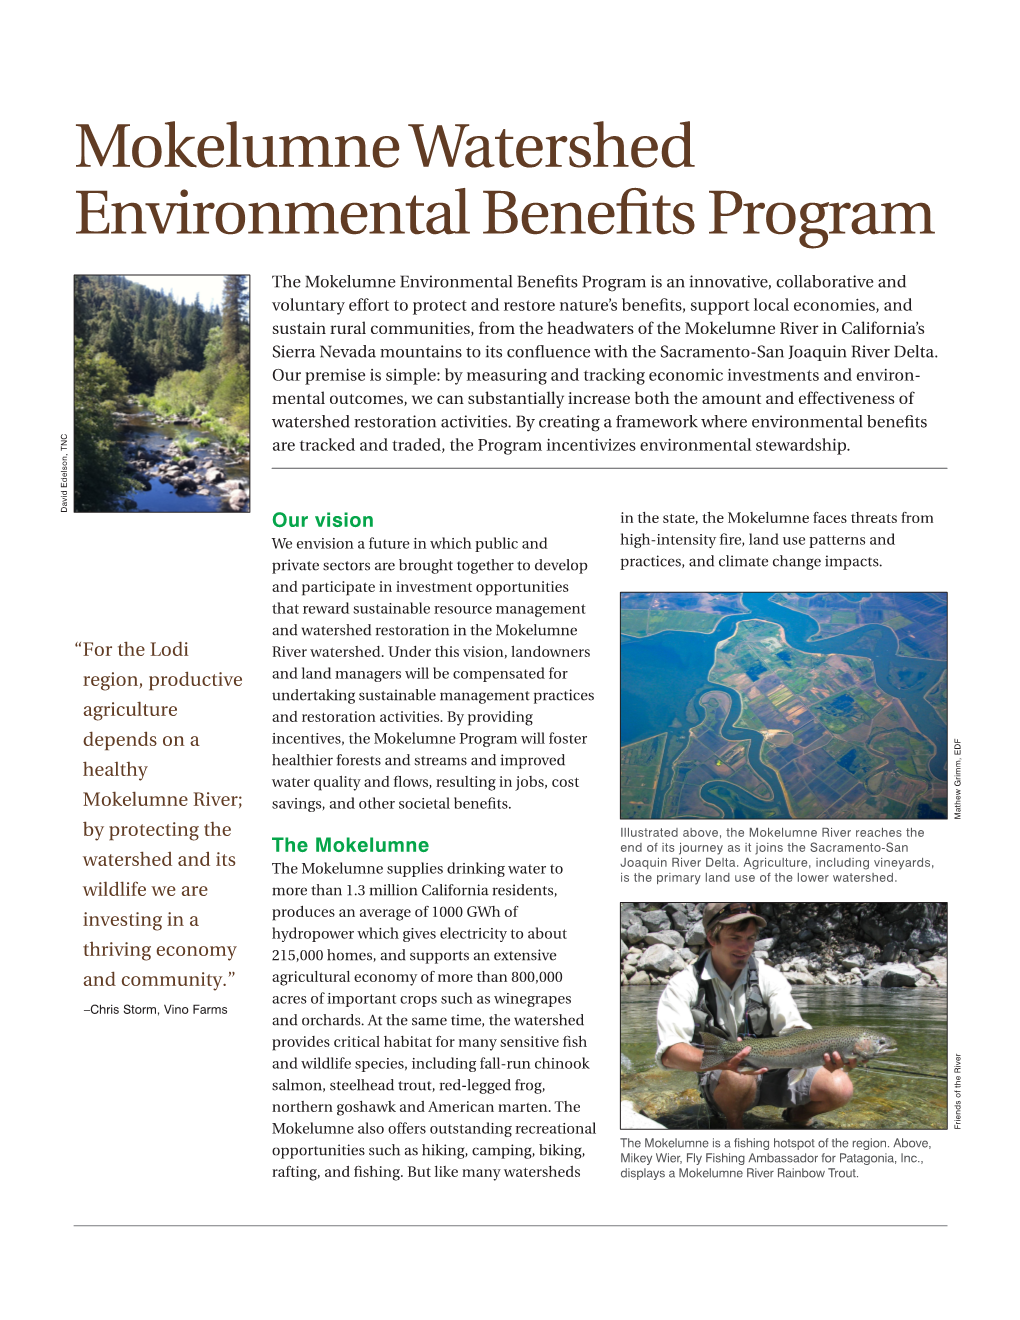 Mokelumne Watershed Environmental Benefits Program